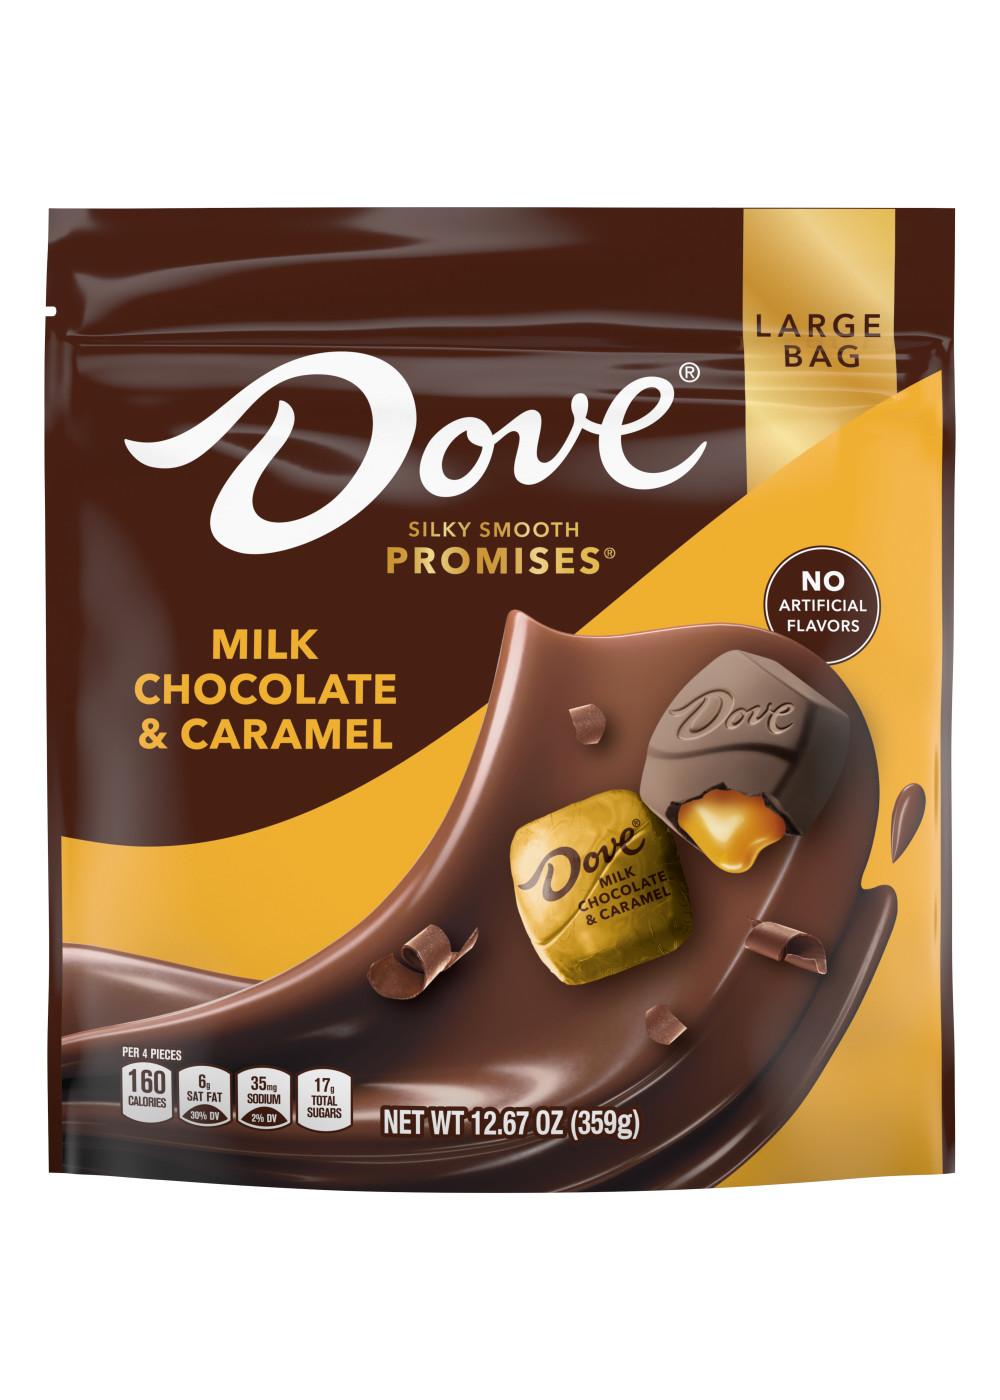 Dove Promises Milk Chocolate & Caramel Candy - Large Bag; image 1 of 3